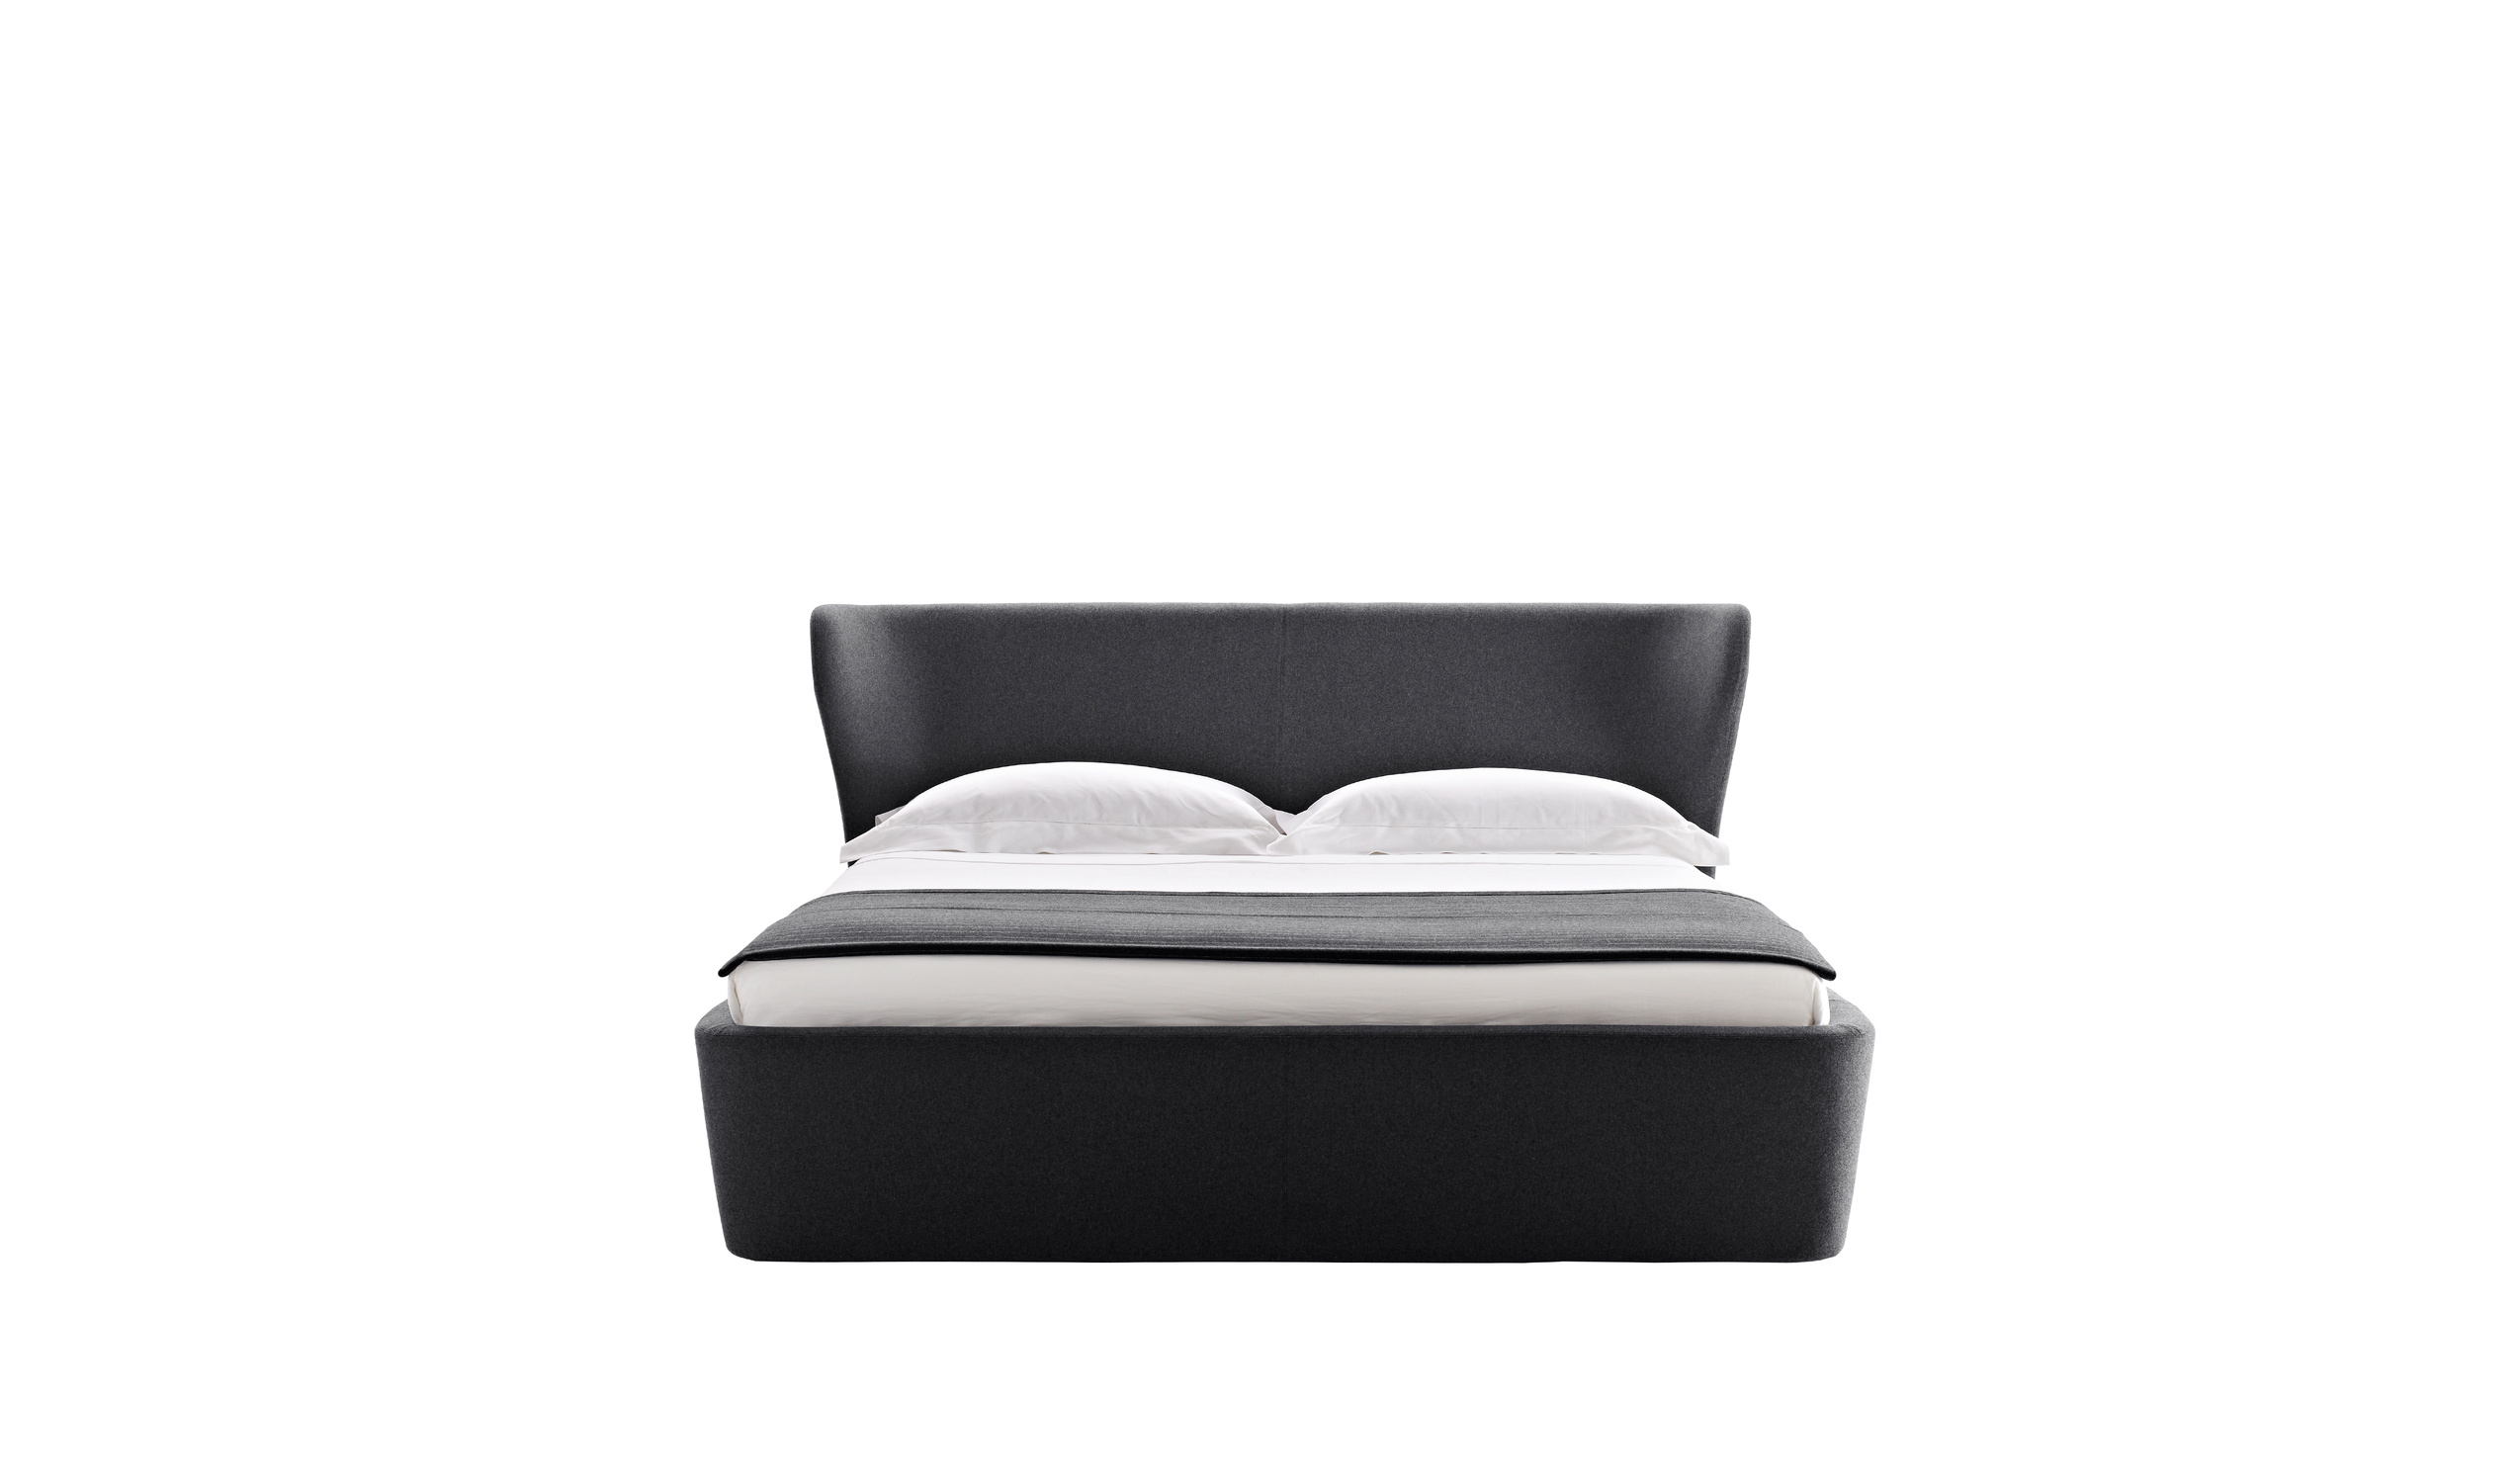 Designer Italian modern beds - Papilio Beds 1